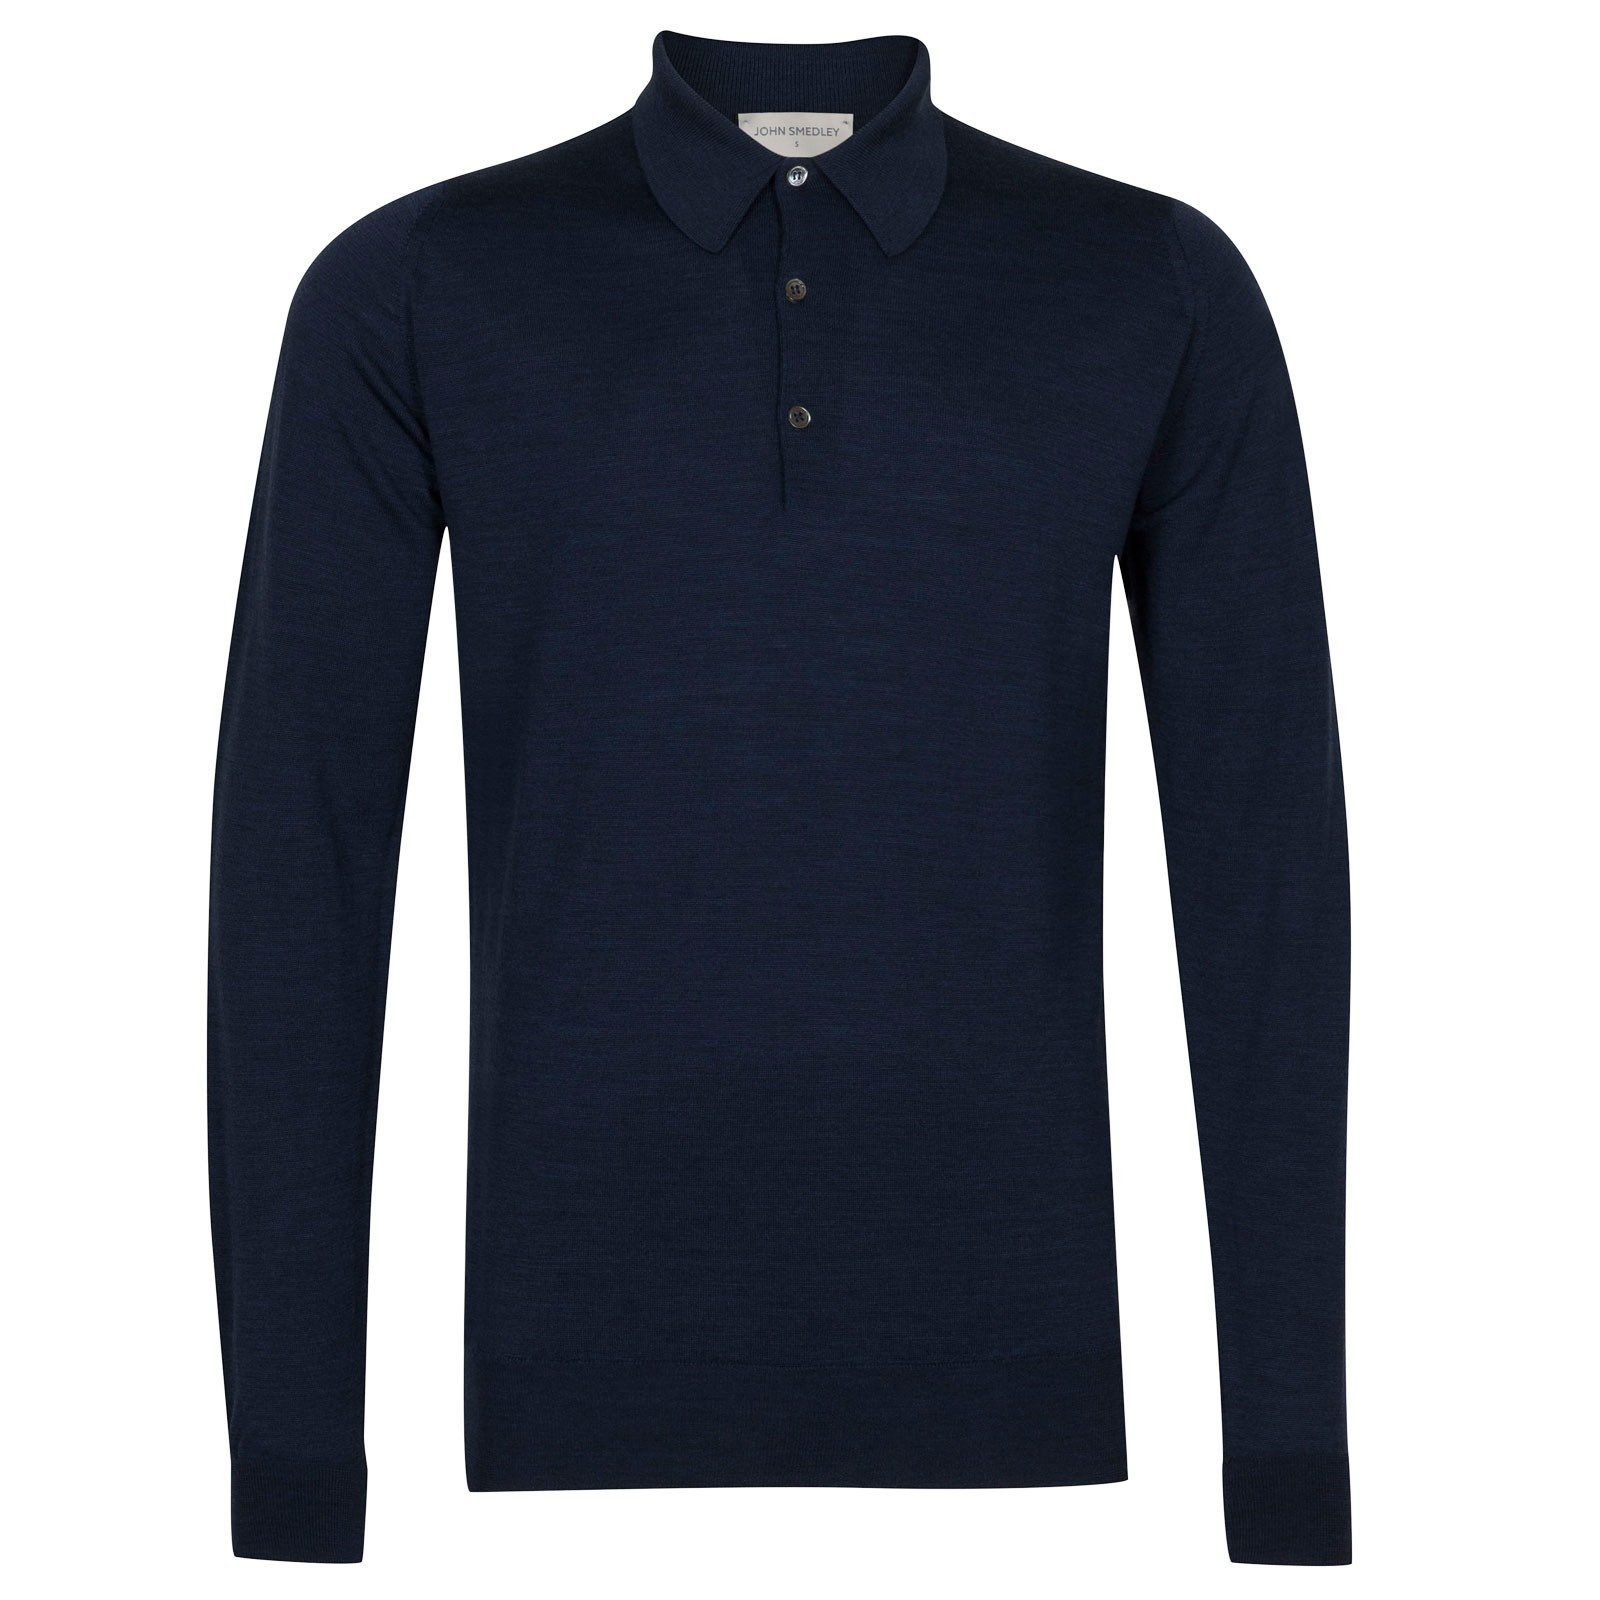 John Smedley Dorset Polo Shirt Long Sleeve Indigo Merino Wool - Quality ...